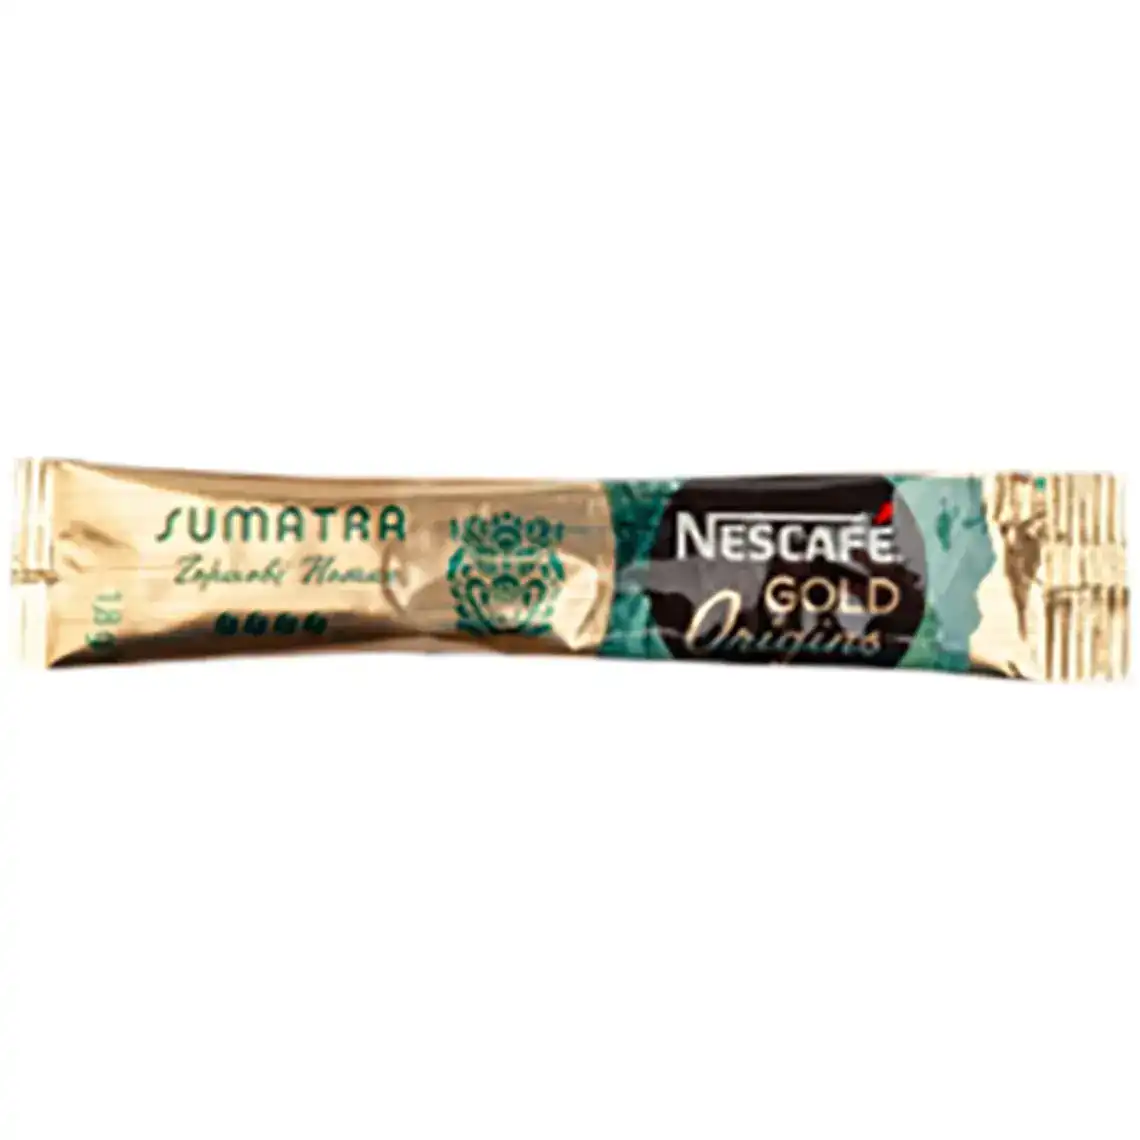 Кава розчинна Nescafe Gold Sumatra 1.8 г